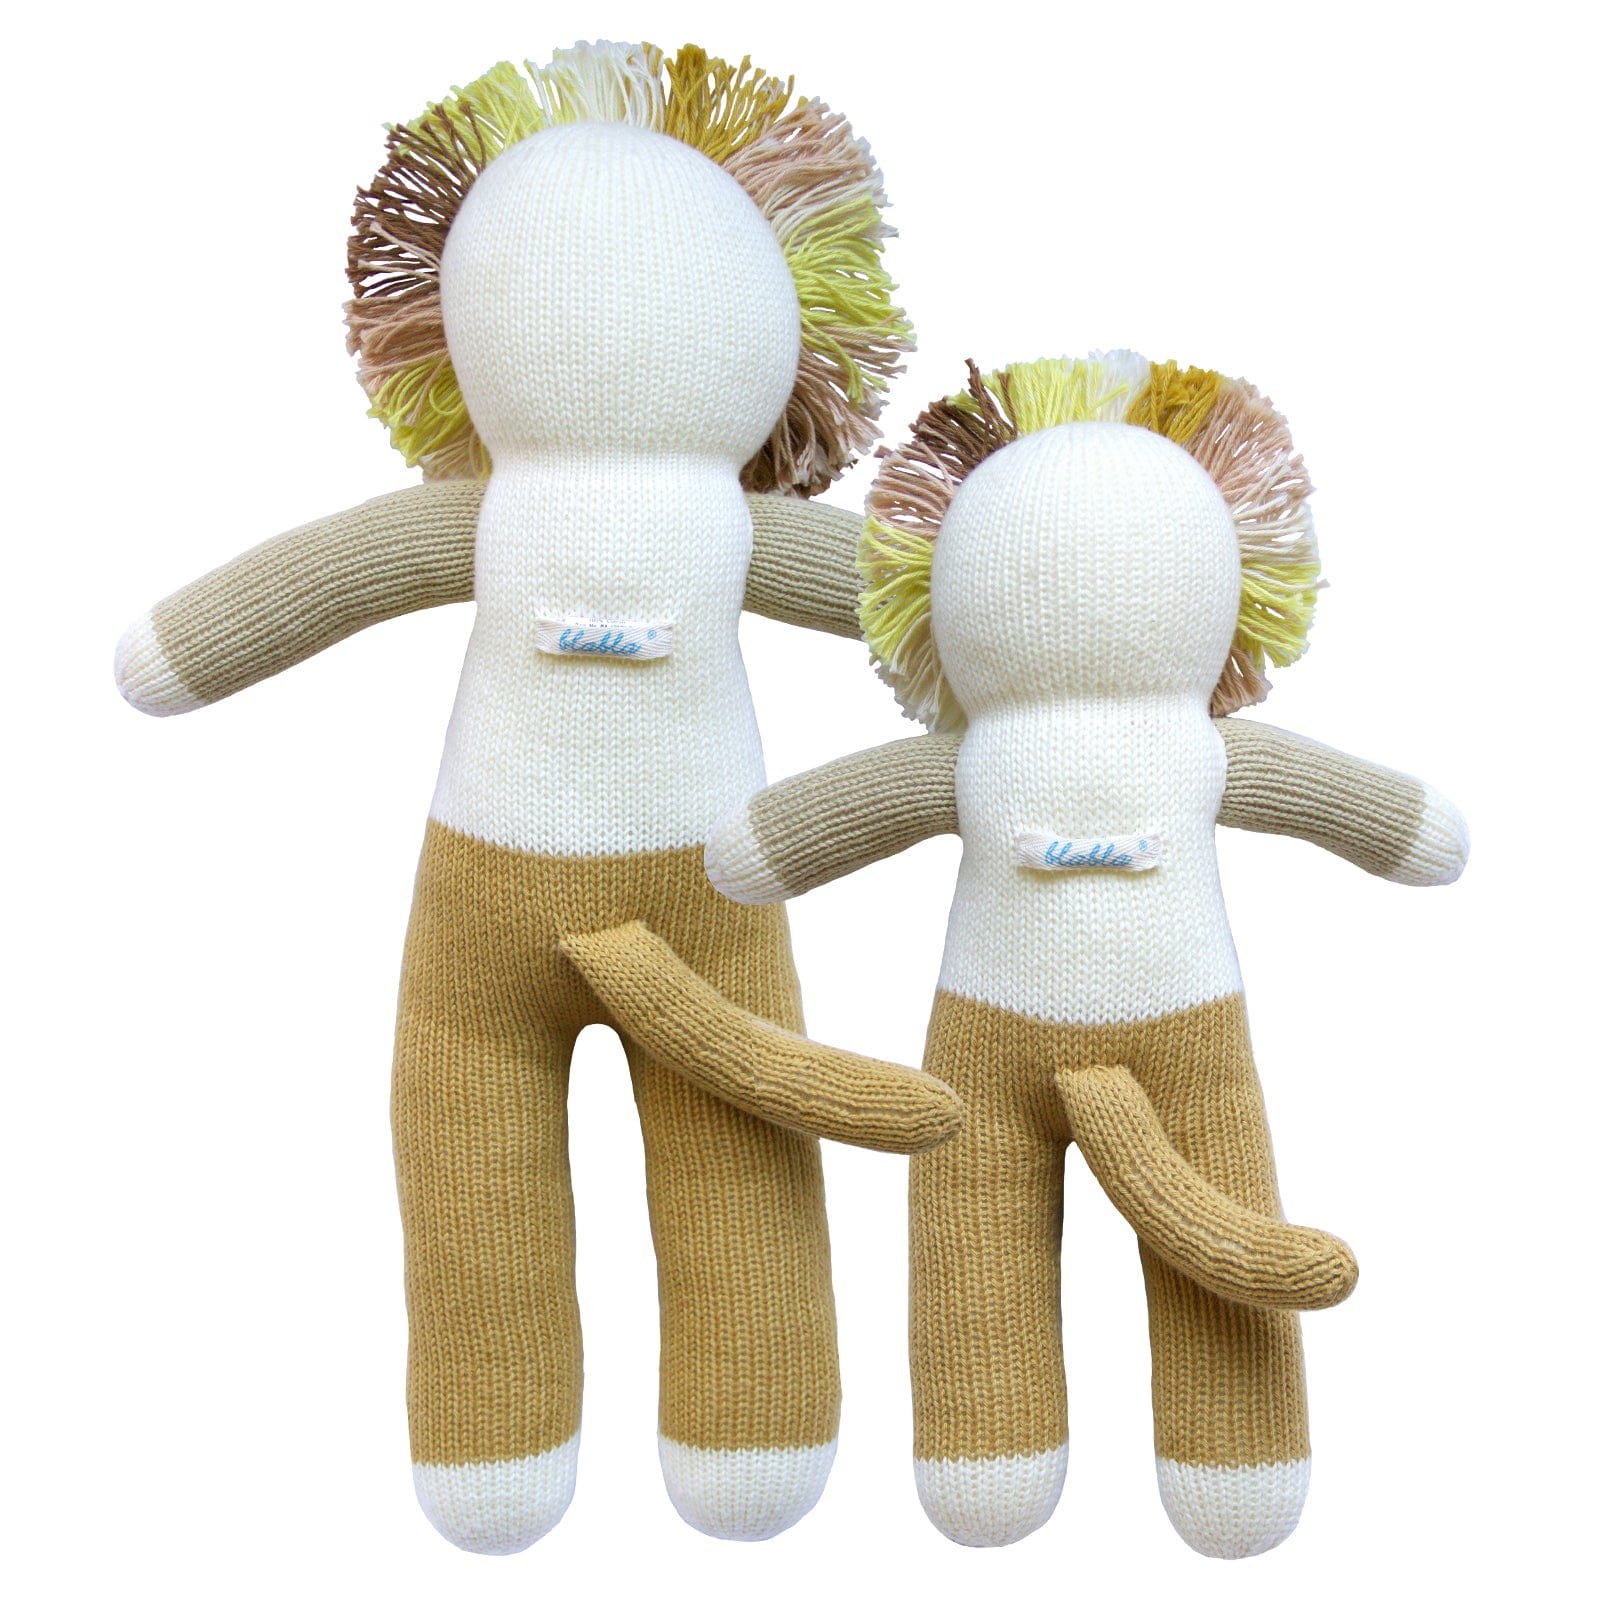 Lionel the Lion – Hand Knit Stuffed Animal Doll – Blabla Kids